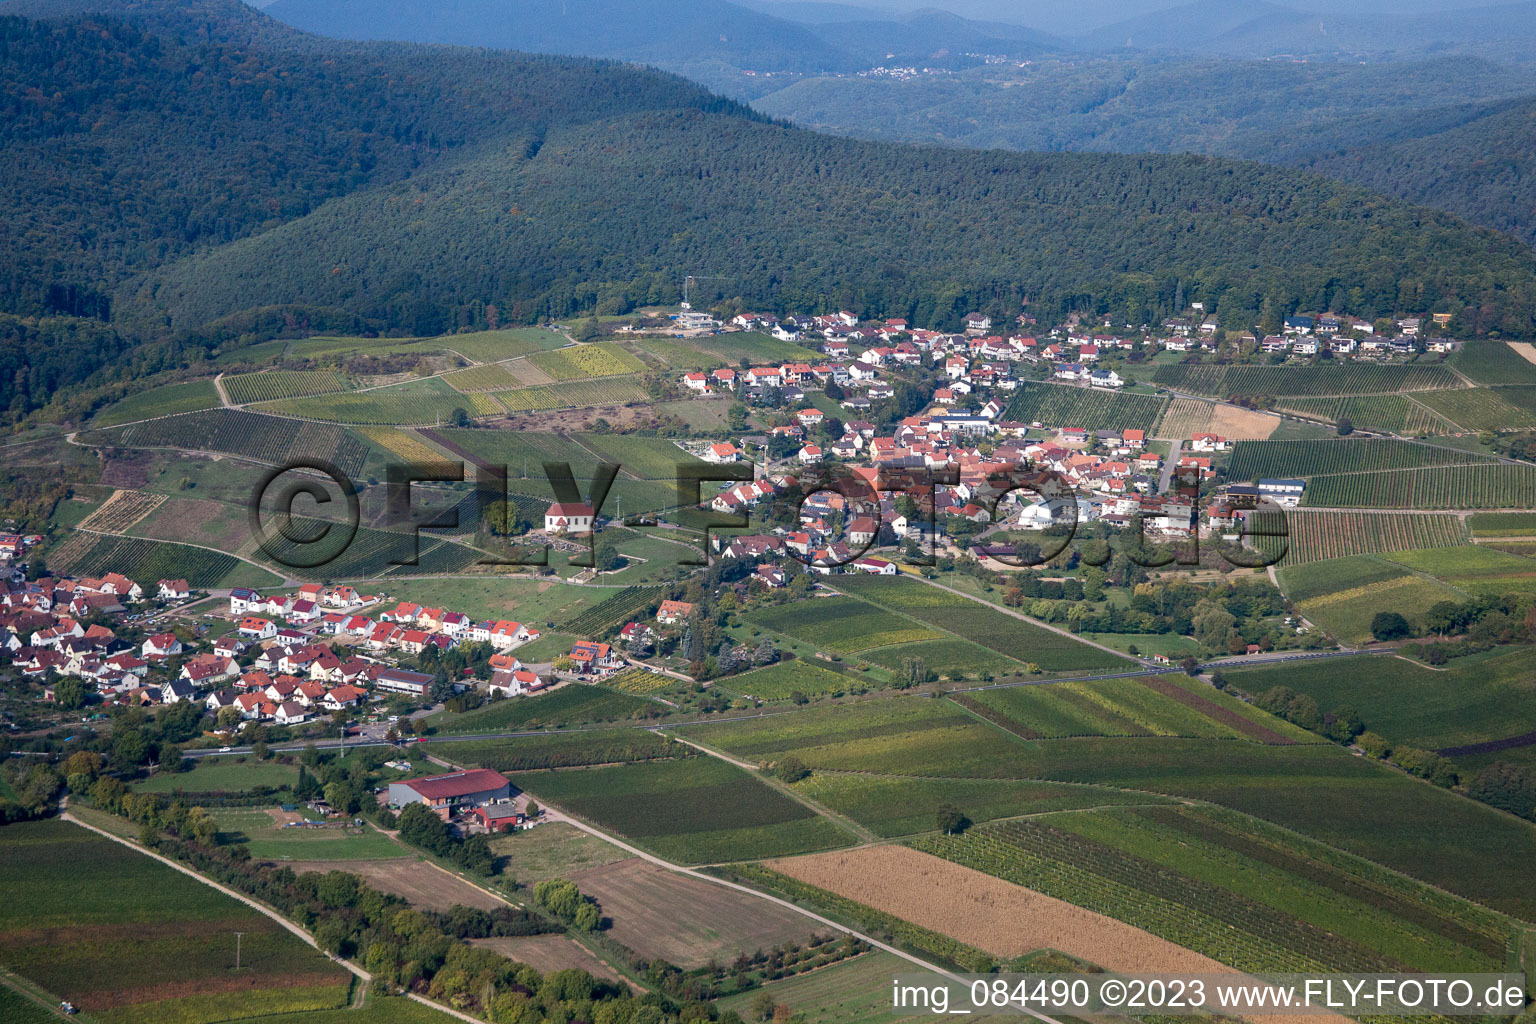 Oblique view of District Gleiszellen in Gleiszellen-Gleishorbach in the state Rhineland-Palatinate, Germany